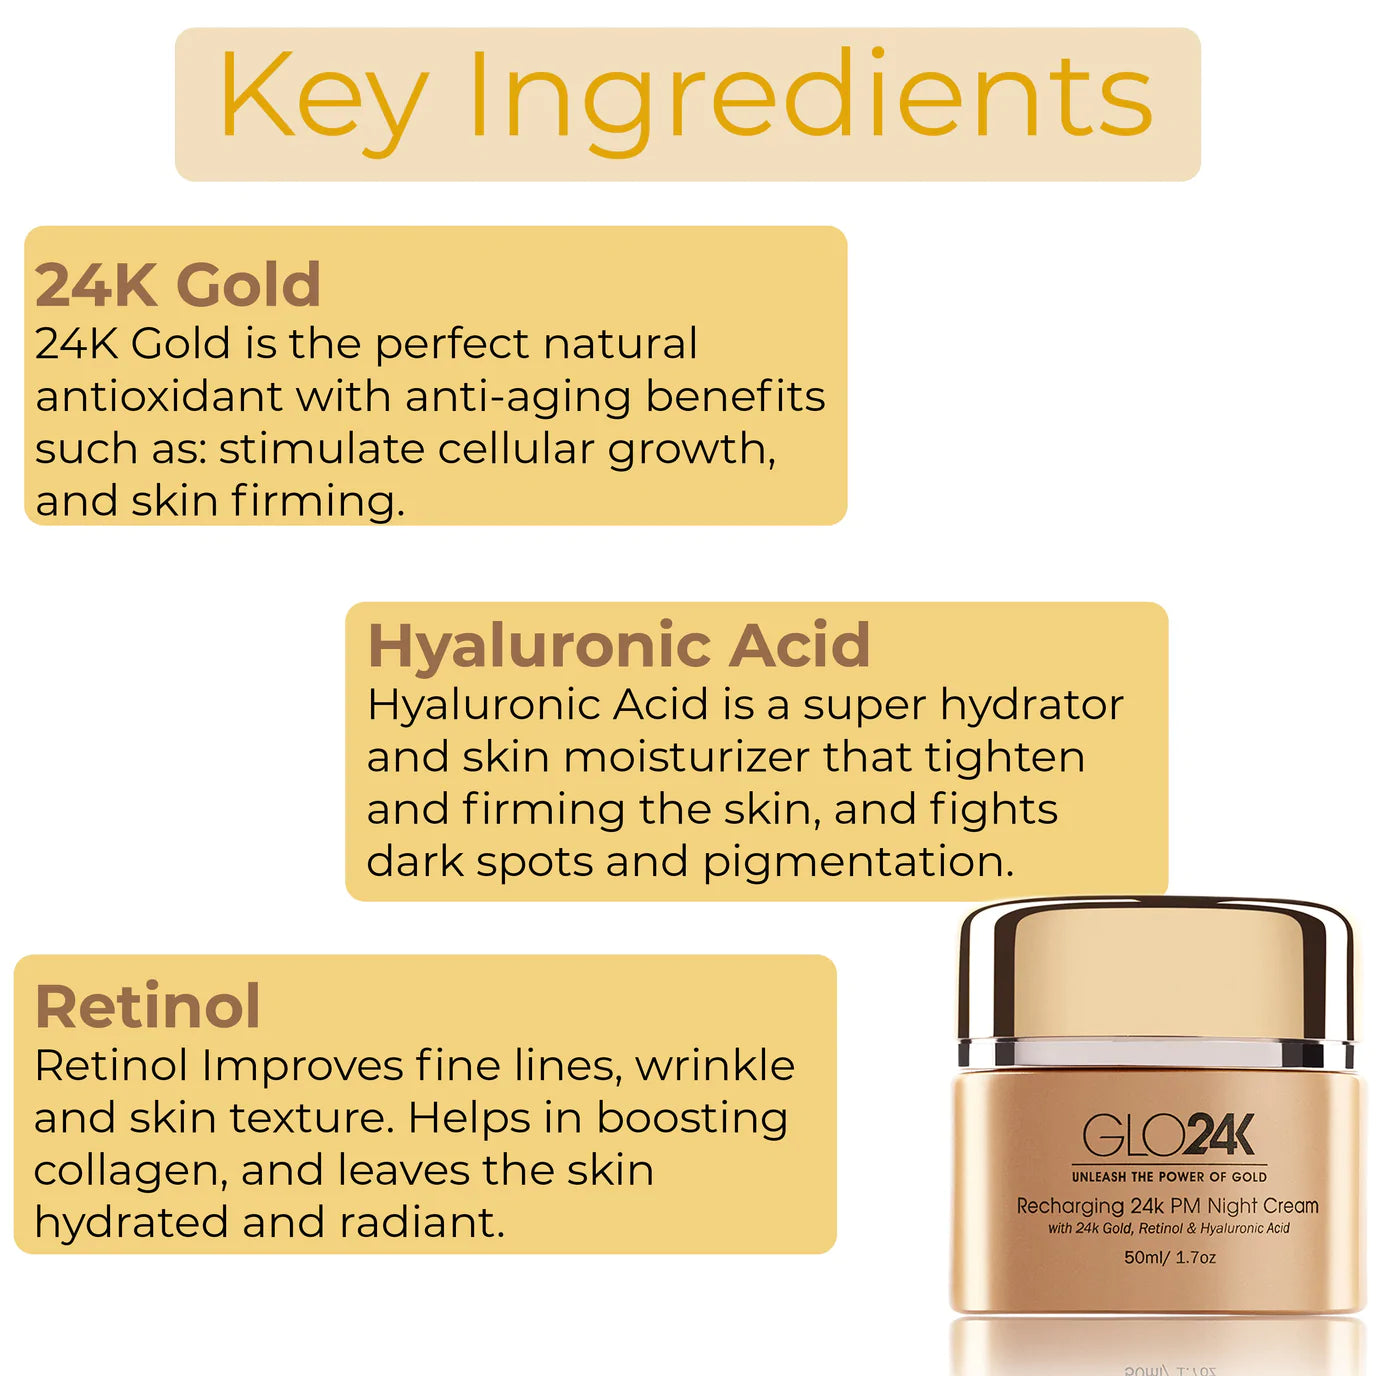 Key ingredients of GLO24K Recharging 24k PM Night Cream